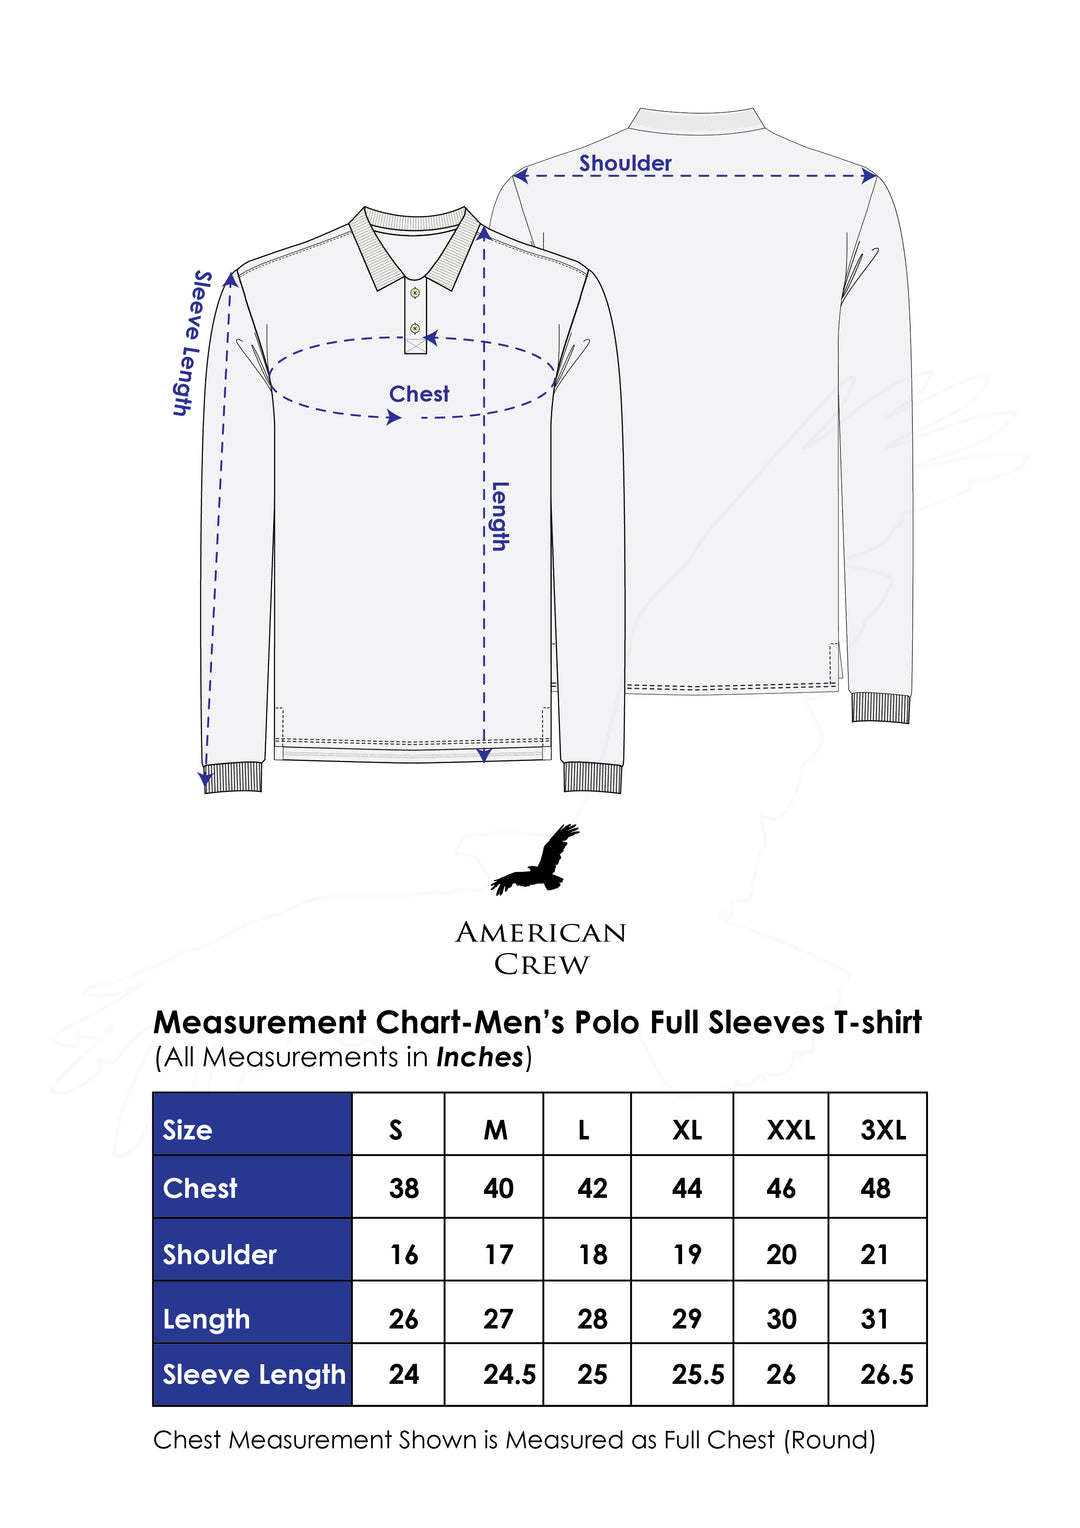 Full Sleeves Polo Collar T-Shirt for Men - Grey Melange Cotton Poly Blend